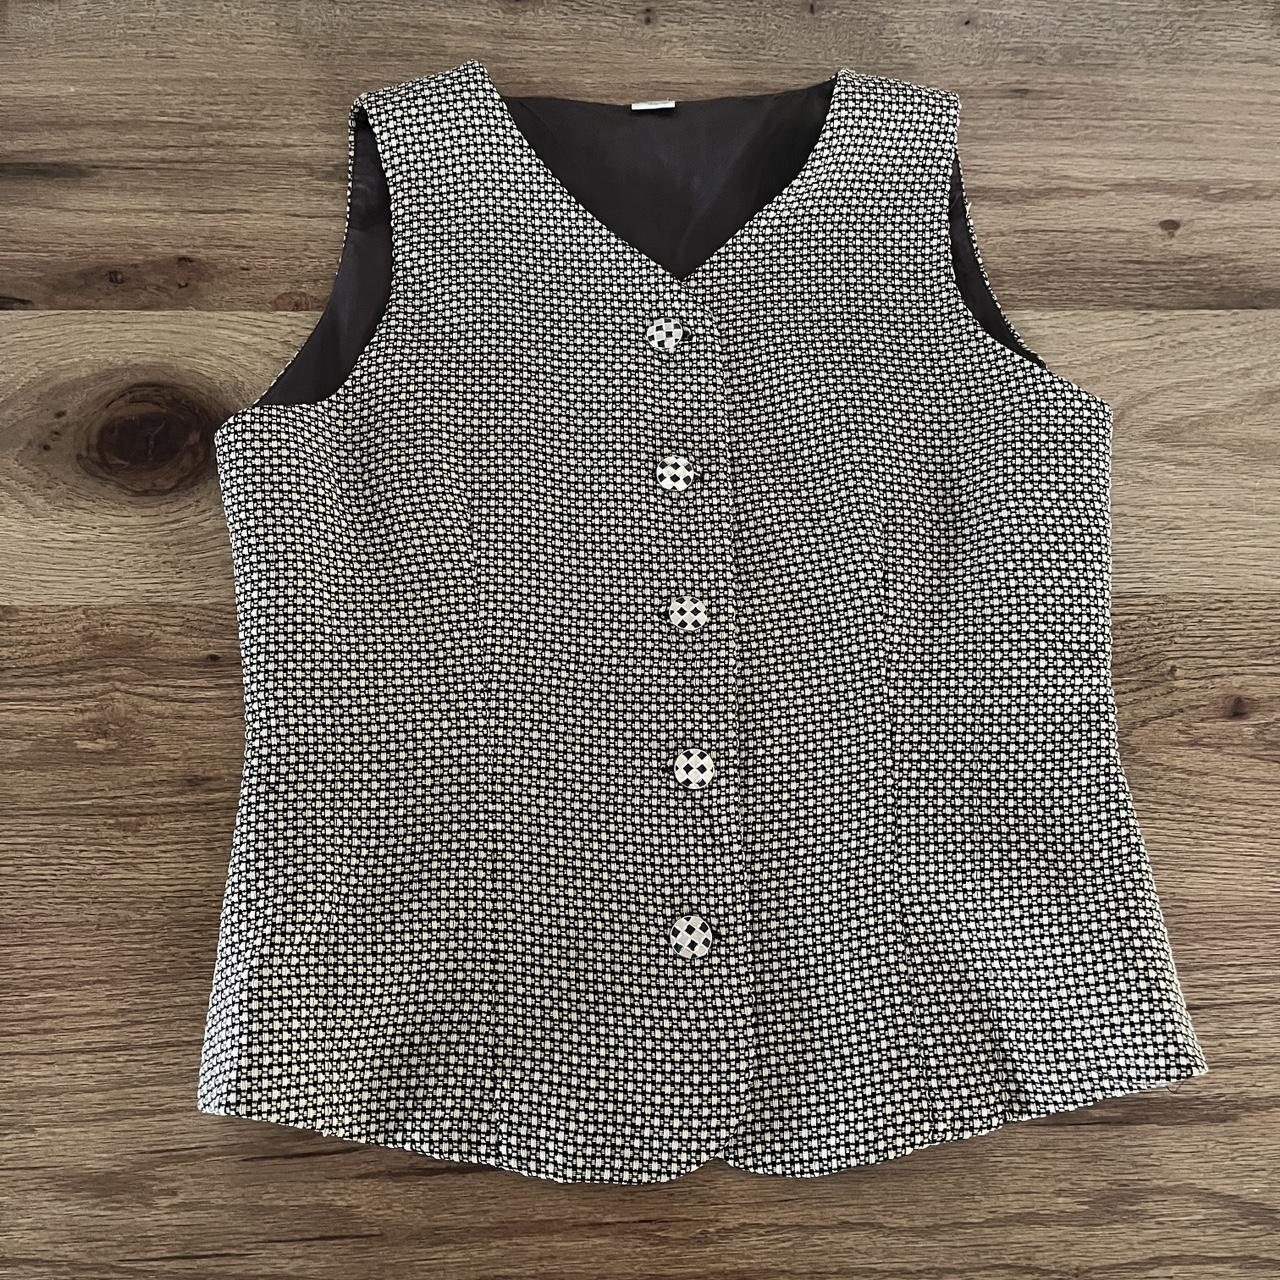 Academia vest Size 36, fits like a M/L - Depop